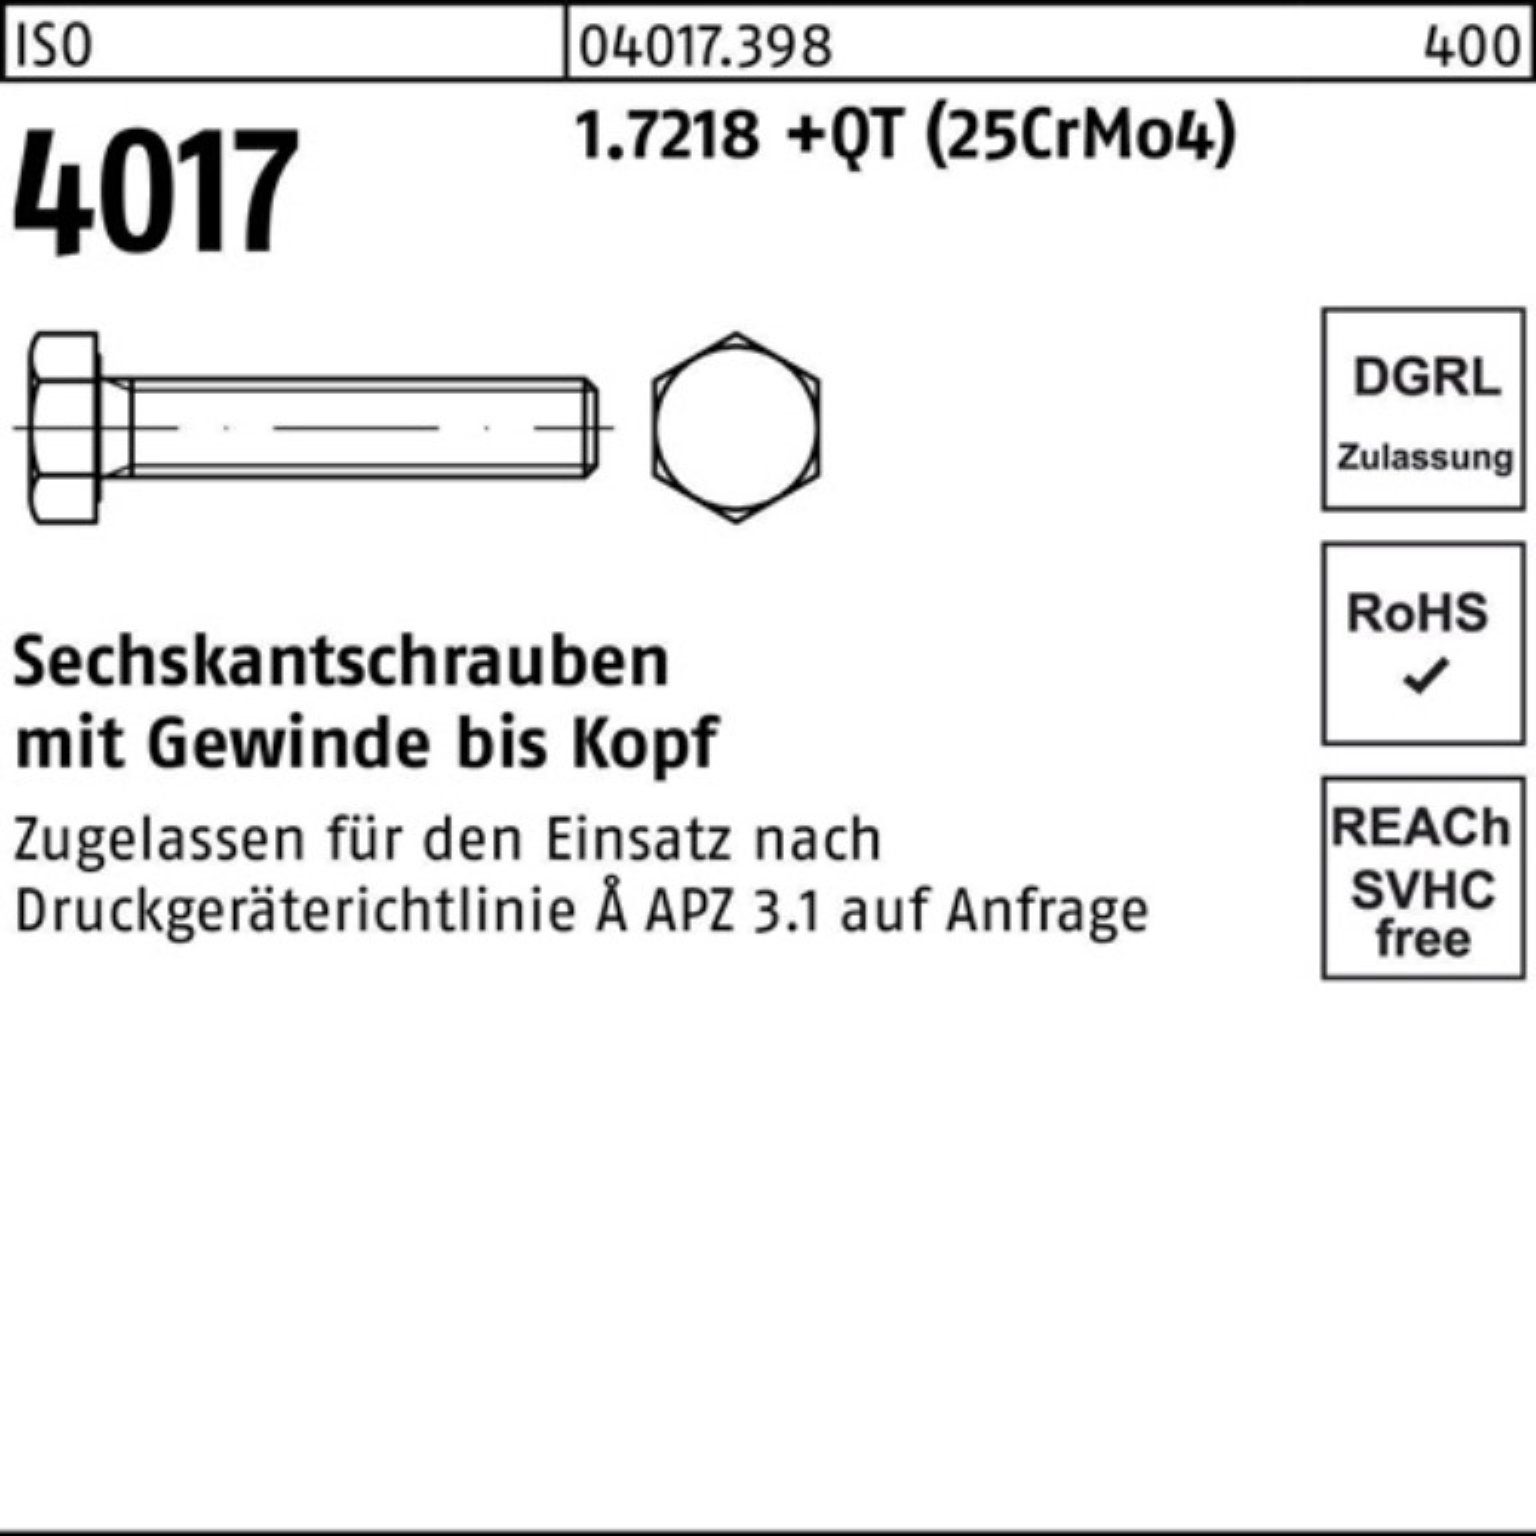 Bufab Sechskantschraube 100er VG 75 4017 Sechskantschraube (25CrMo4) ISO +QT M20x Pack 1.7218